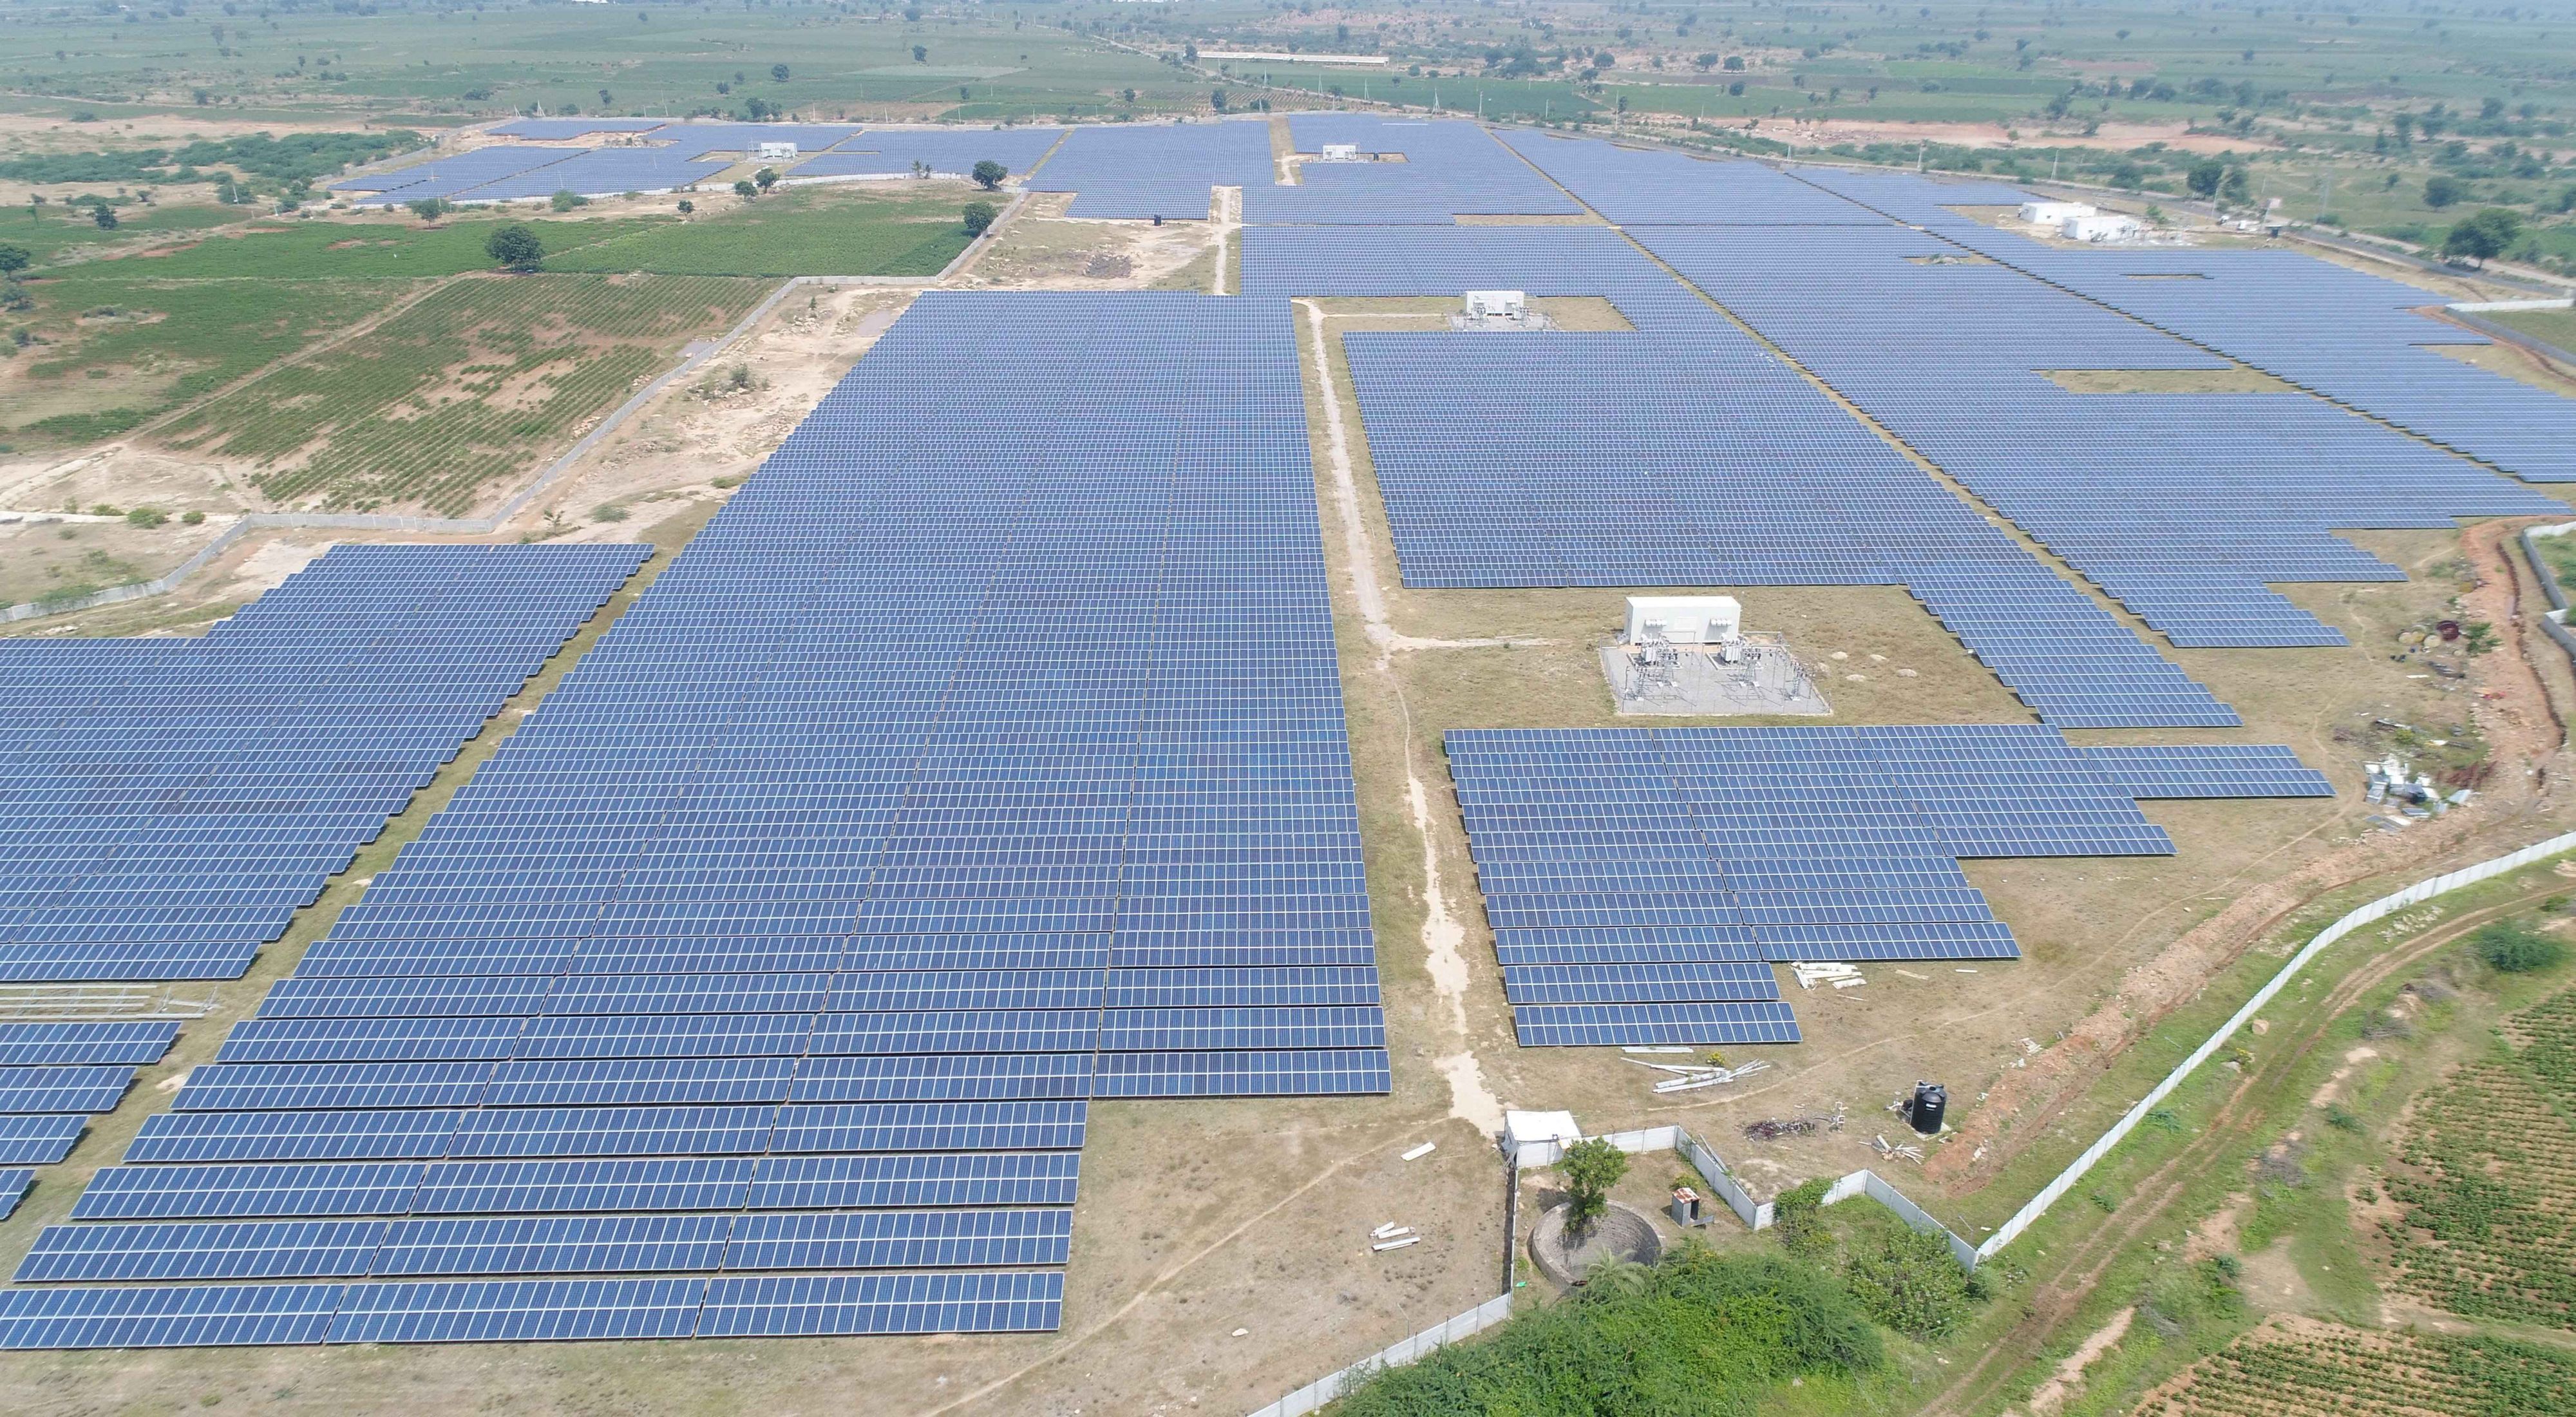 Aerial view of solar park in Pavagada, Karnataka.